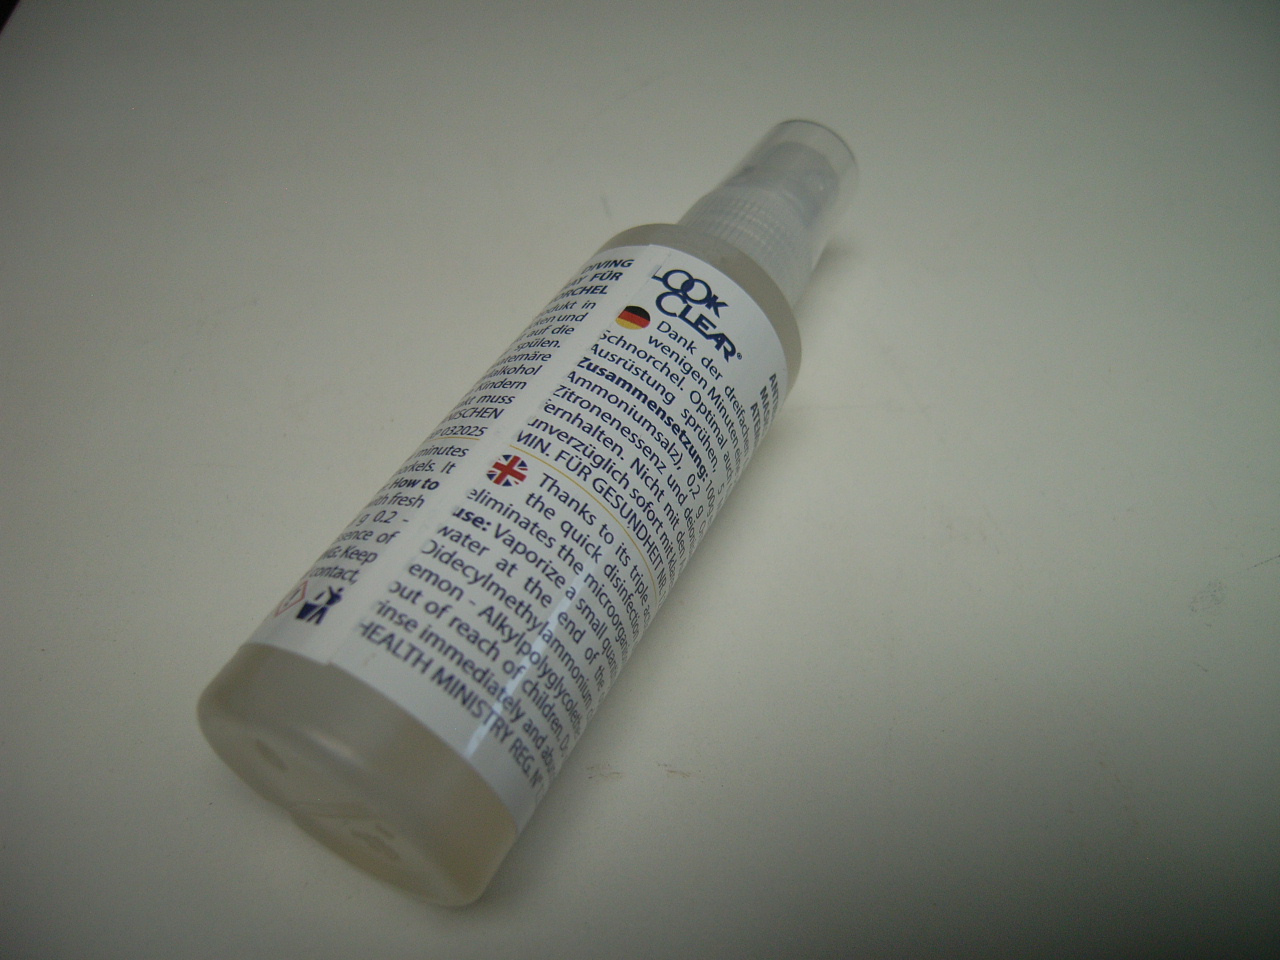 Look Clear Desinfektionsspray ( 58 ml Pumpspray )